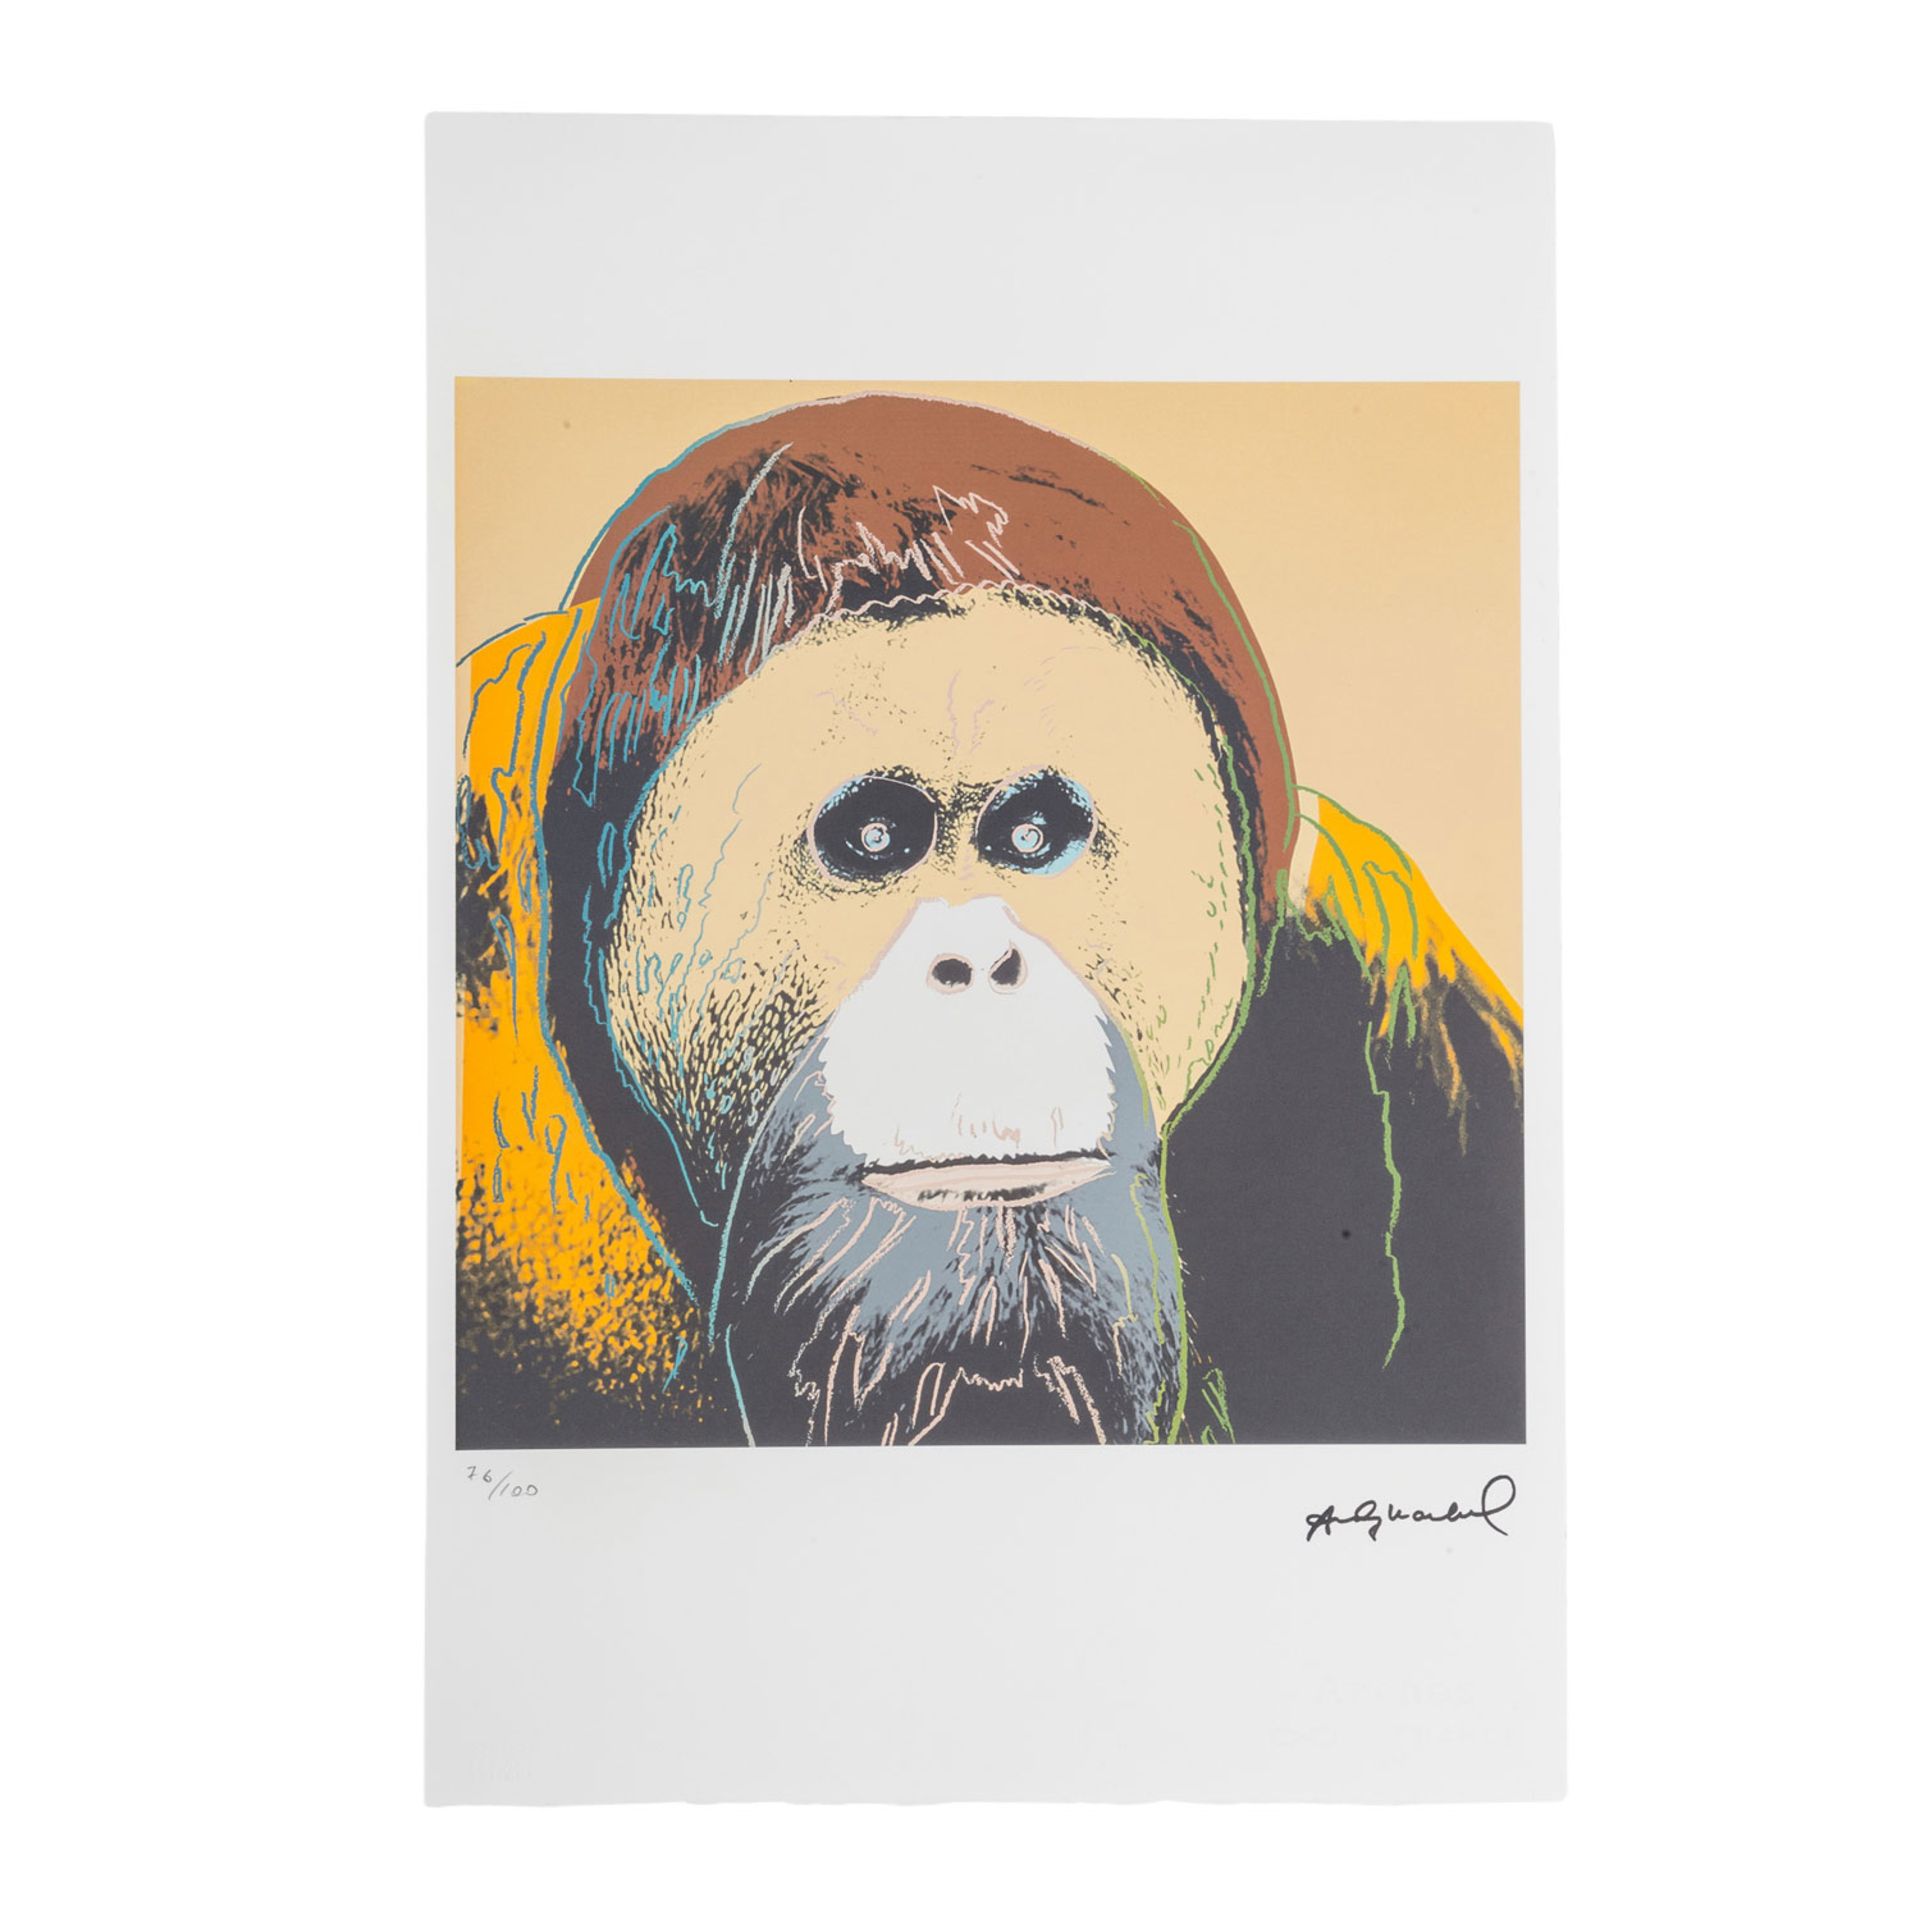 WARHOL, ANDY (1928-1987) "Orangutan"